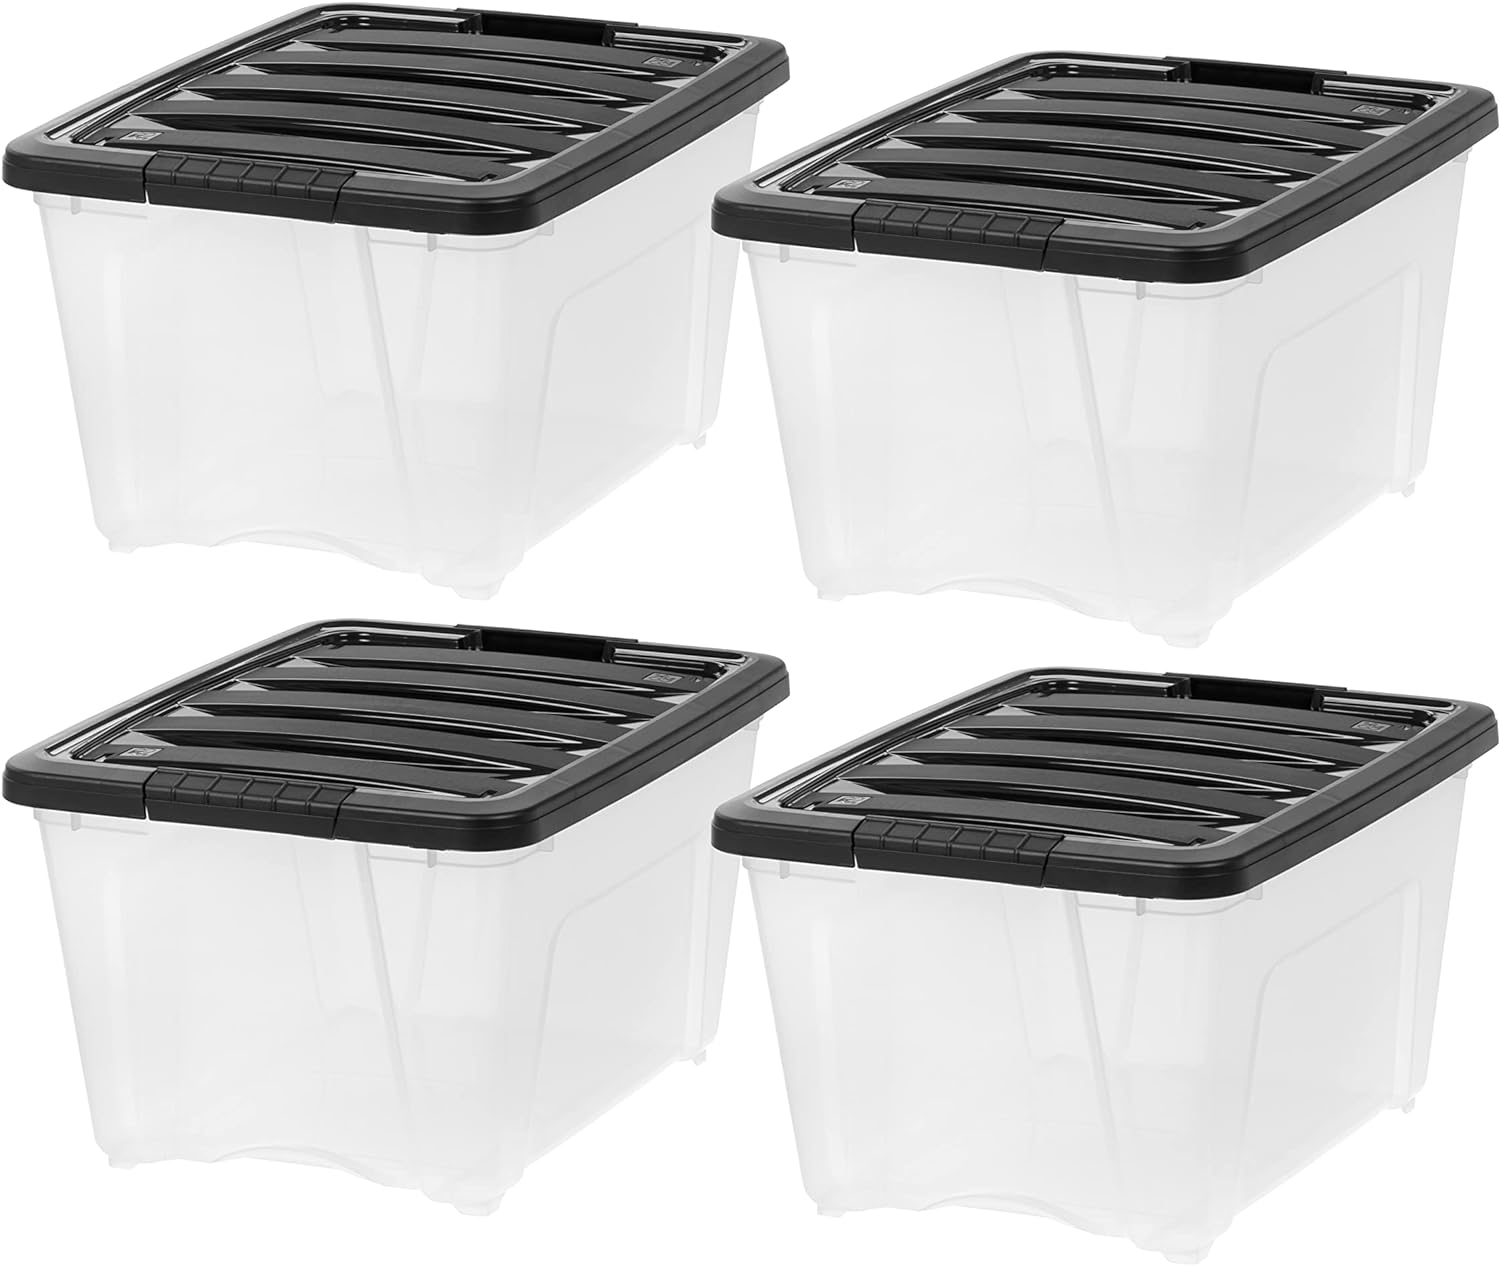 Refrigerator Organizer Bins, Set Of 6 Plastic Organizer Bins, BPA Free